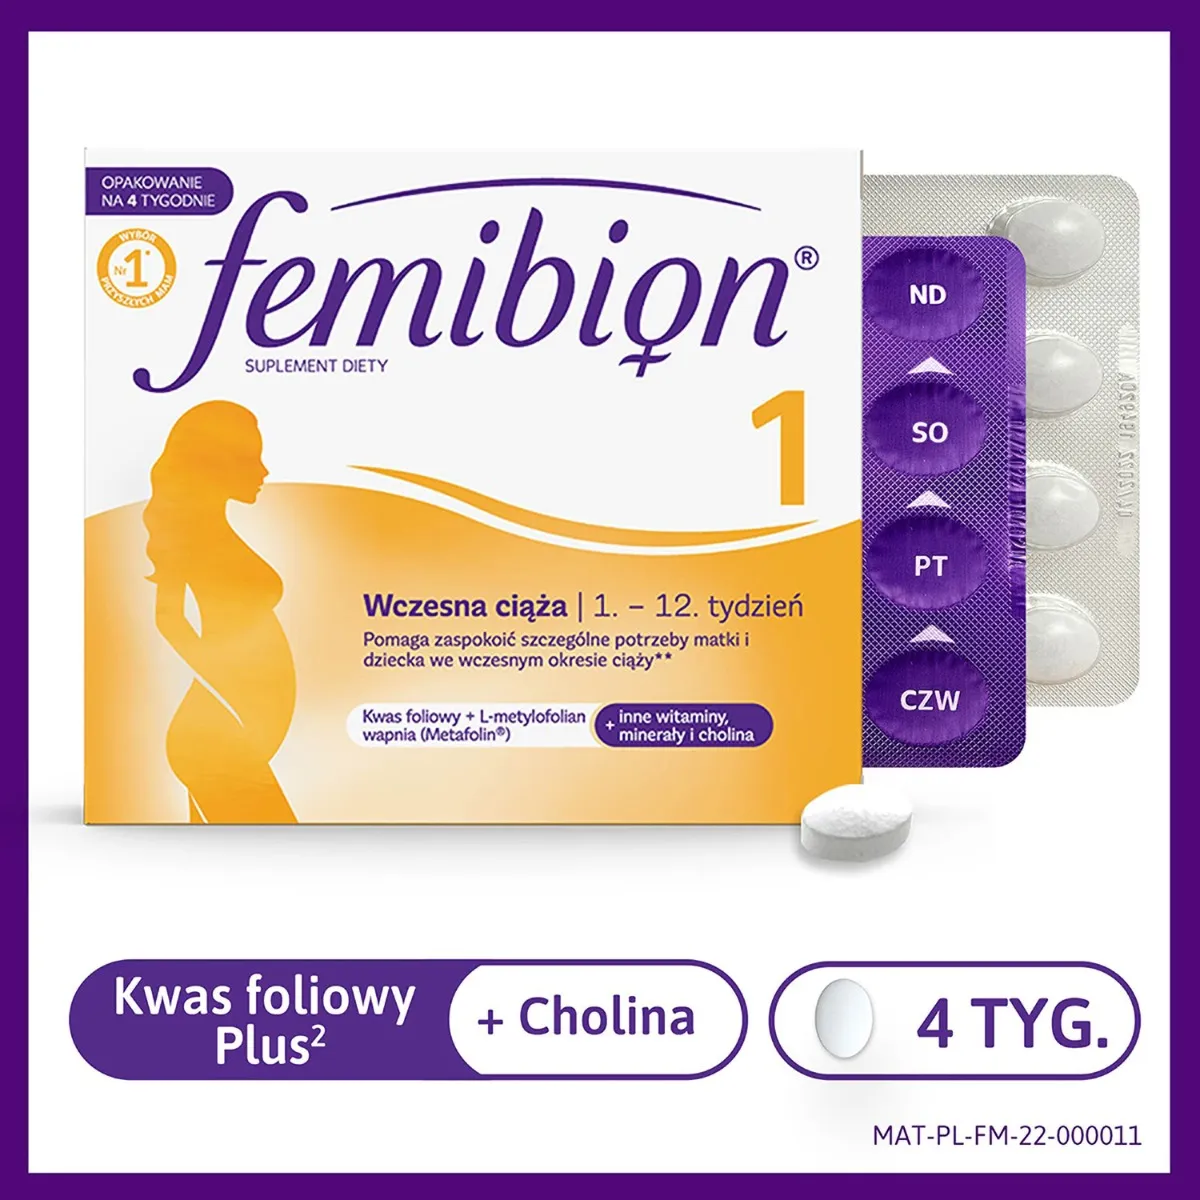 Femibion 1 Wczesna ciąża, suplement diety, 28 tabletek 